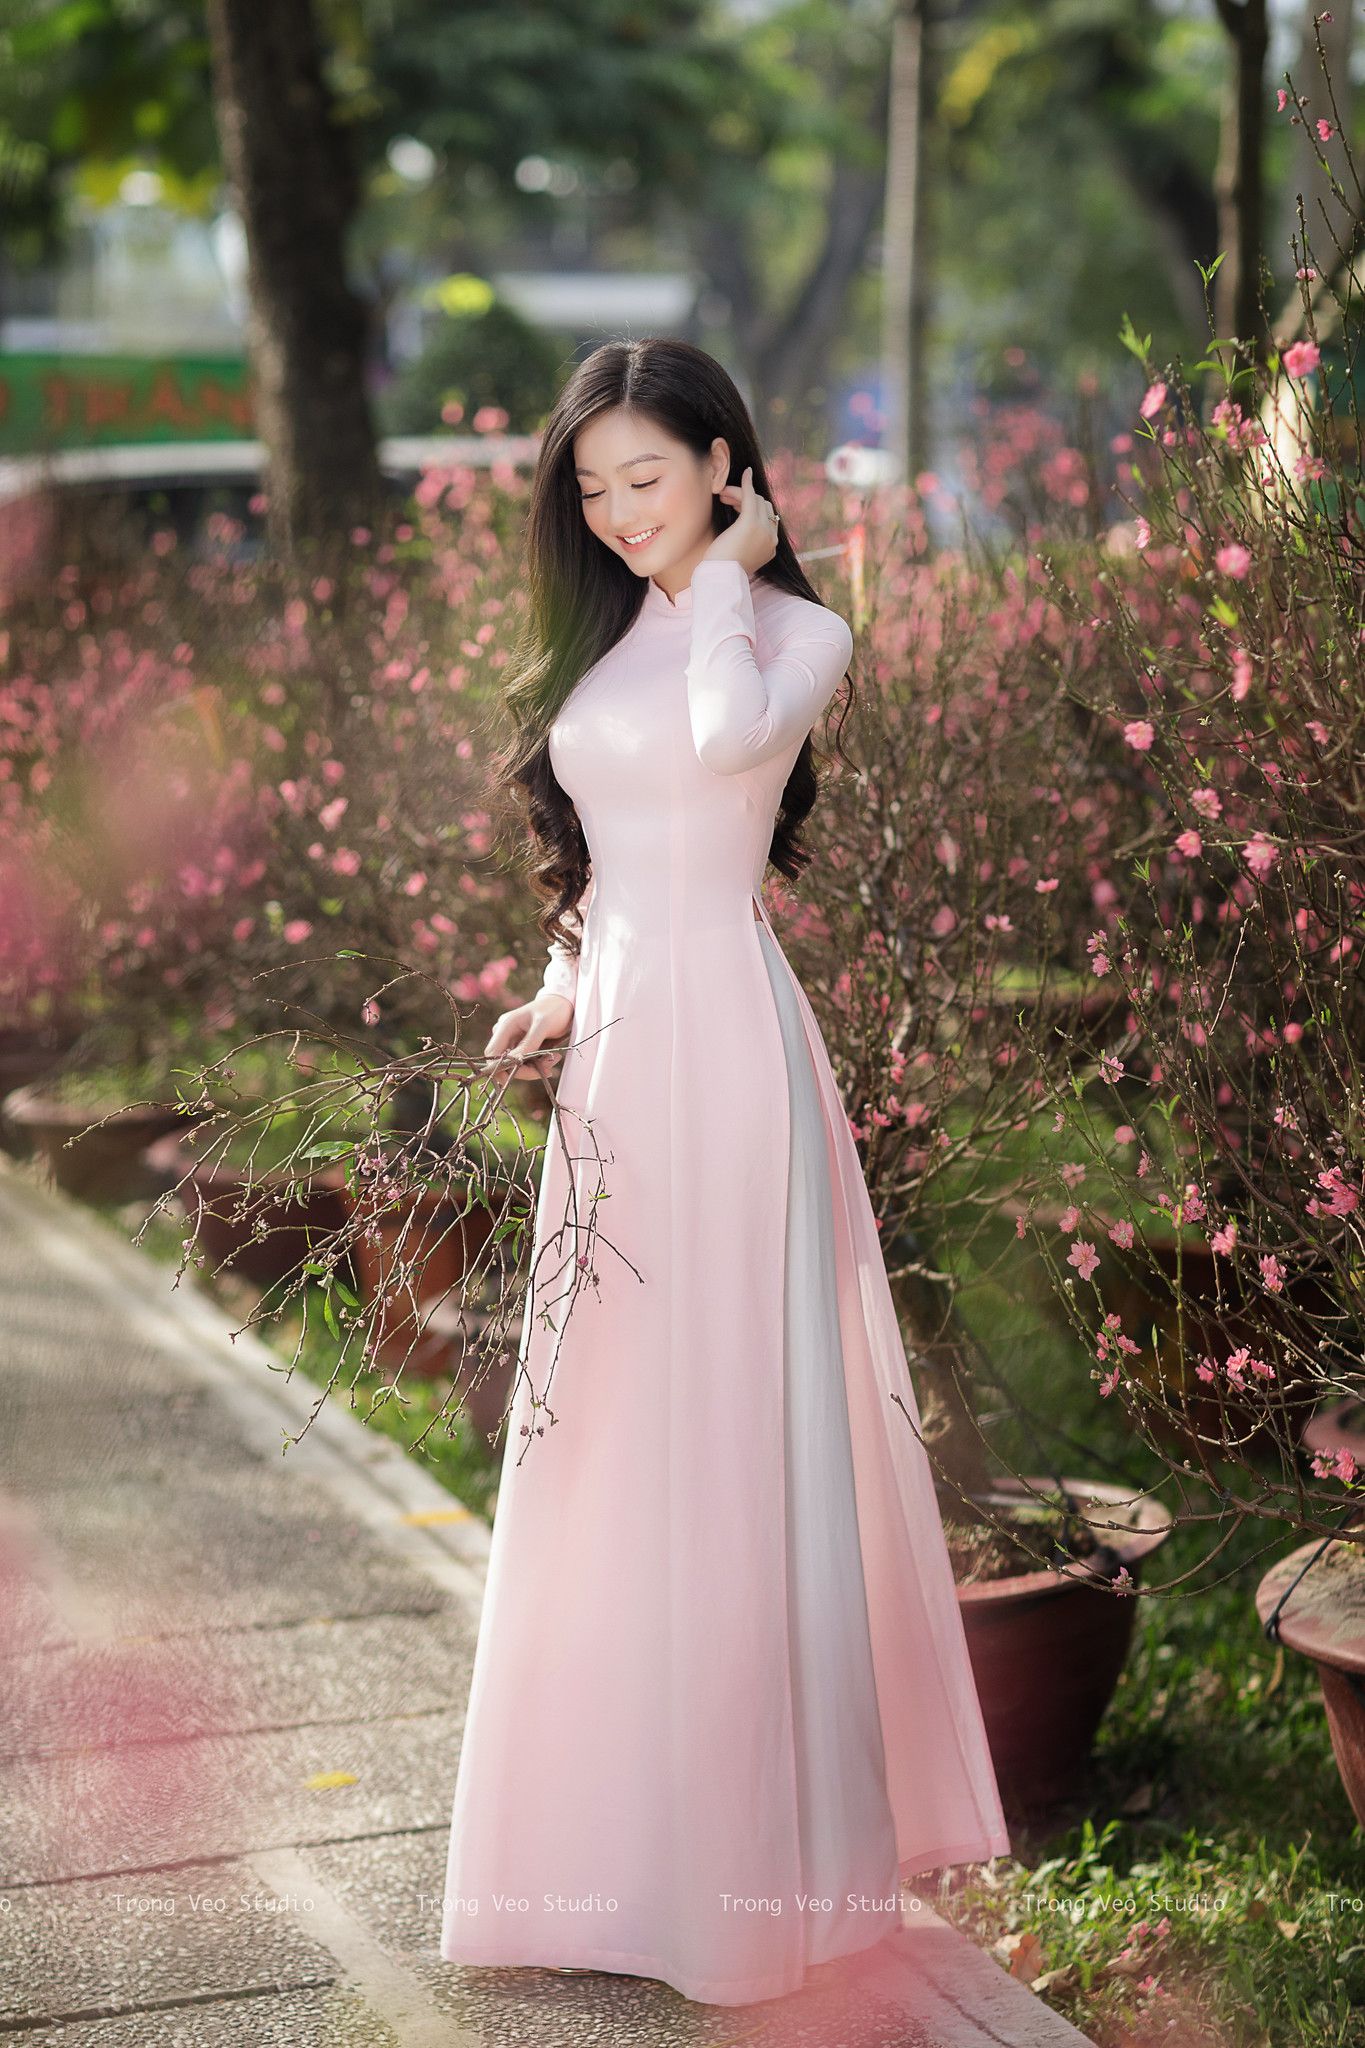 Beautiful Long Dresses for Girls and
Women